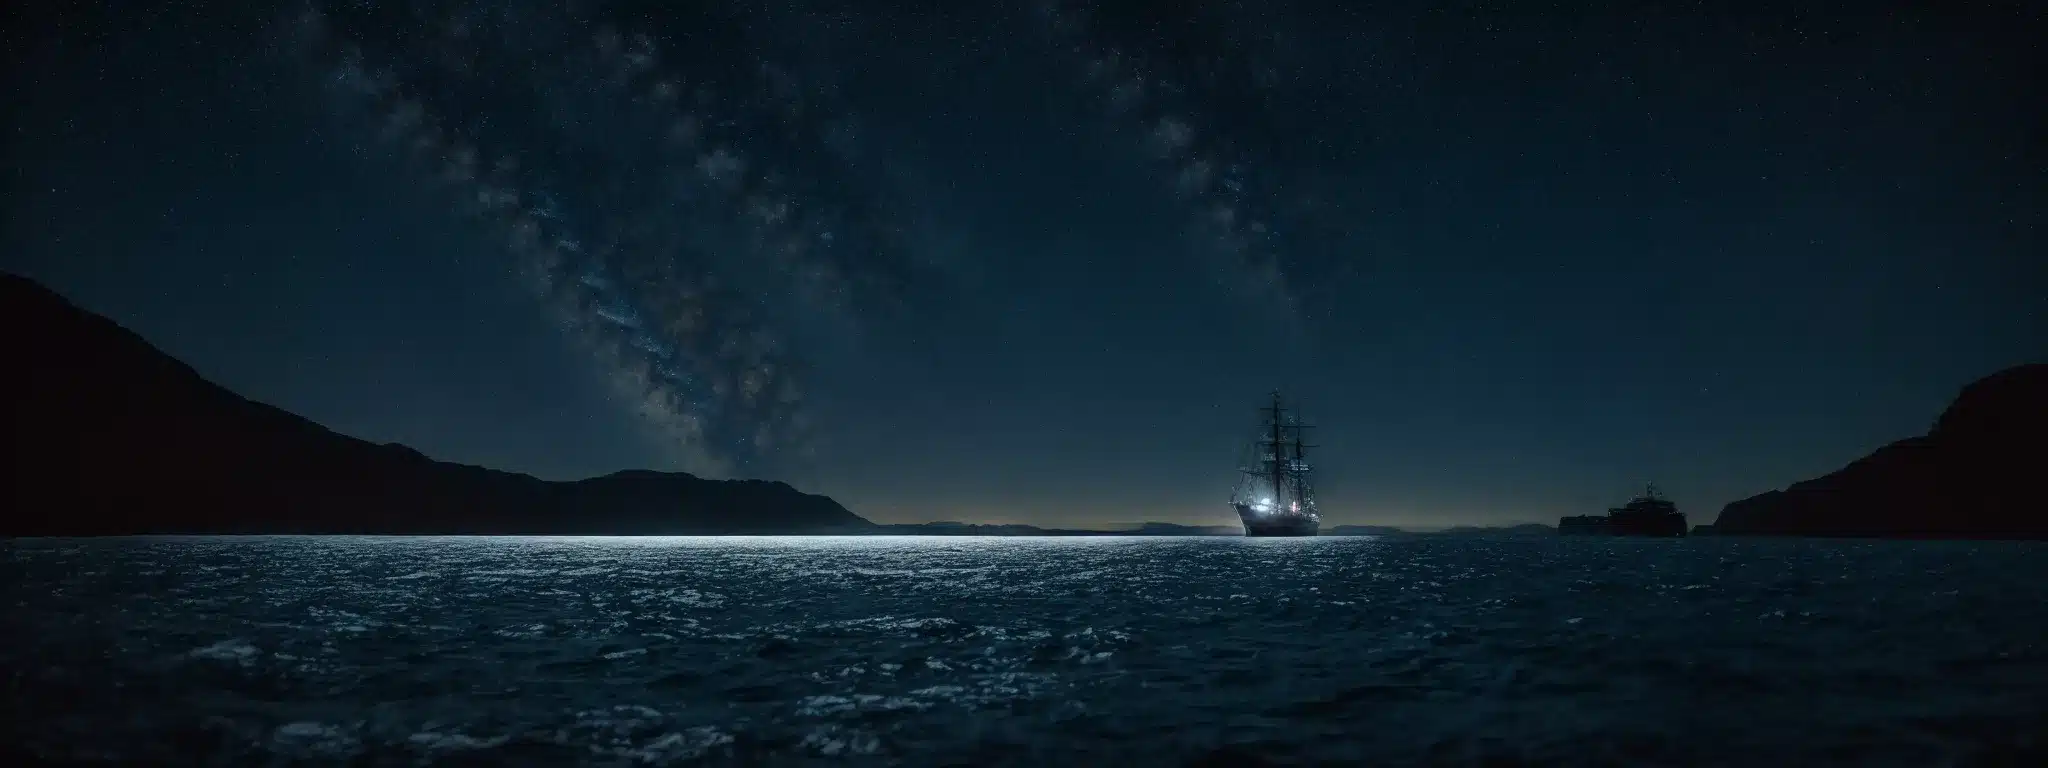 A Lone Ship Navigates The Vast Ocean Under A Starry Sky, Symbolizing A Journey Towards Unique Brand Identity.